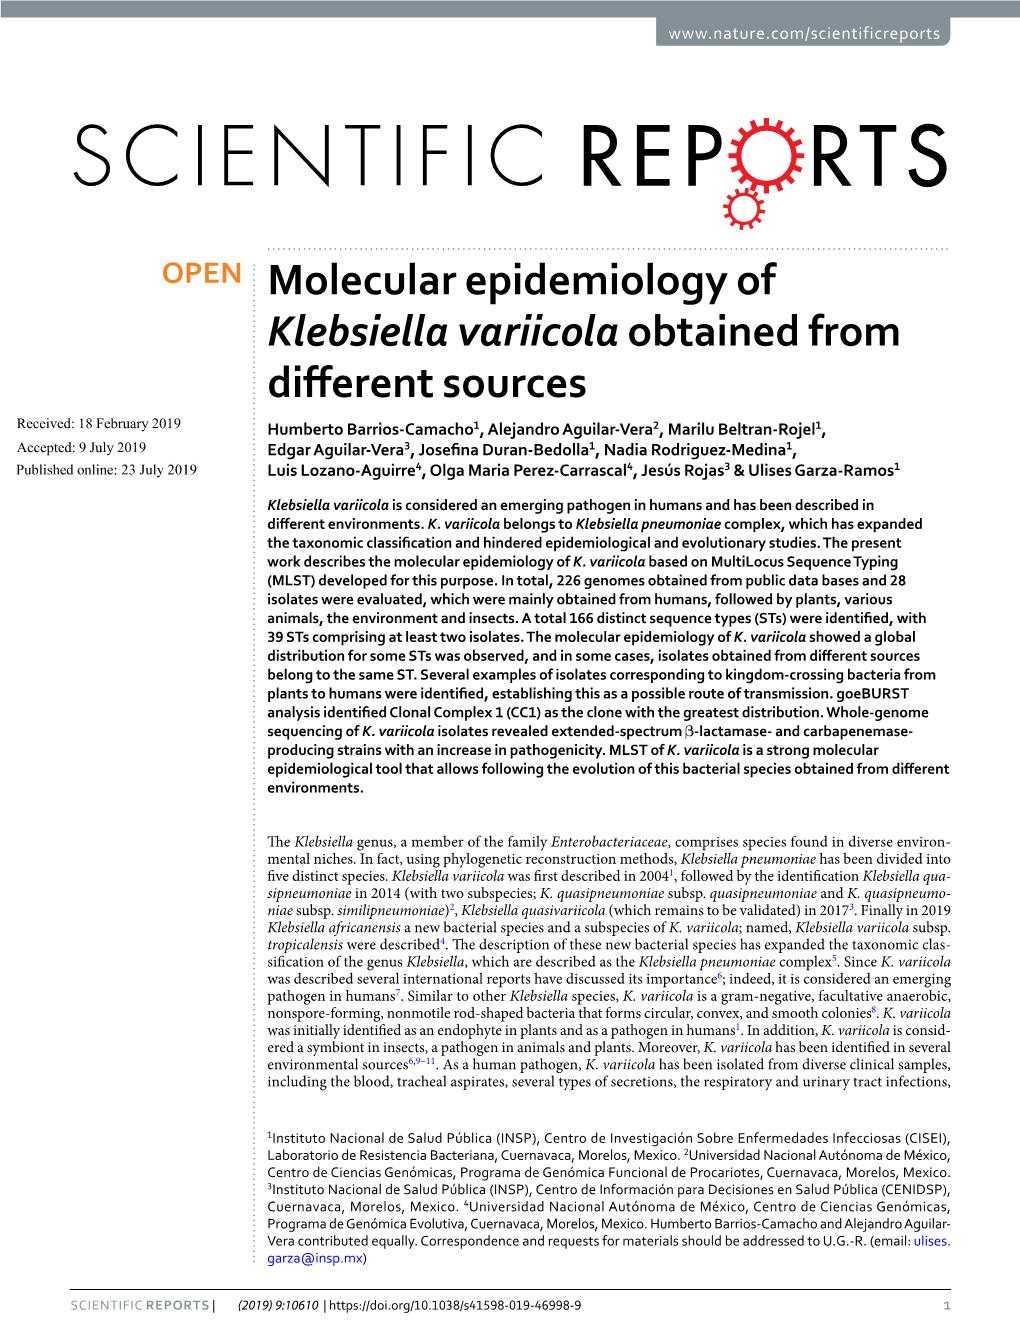 Molecular Epidemiology of Klebsiella Variicola Obtained from Different